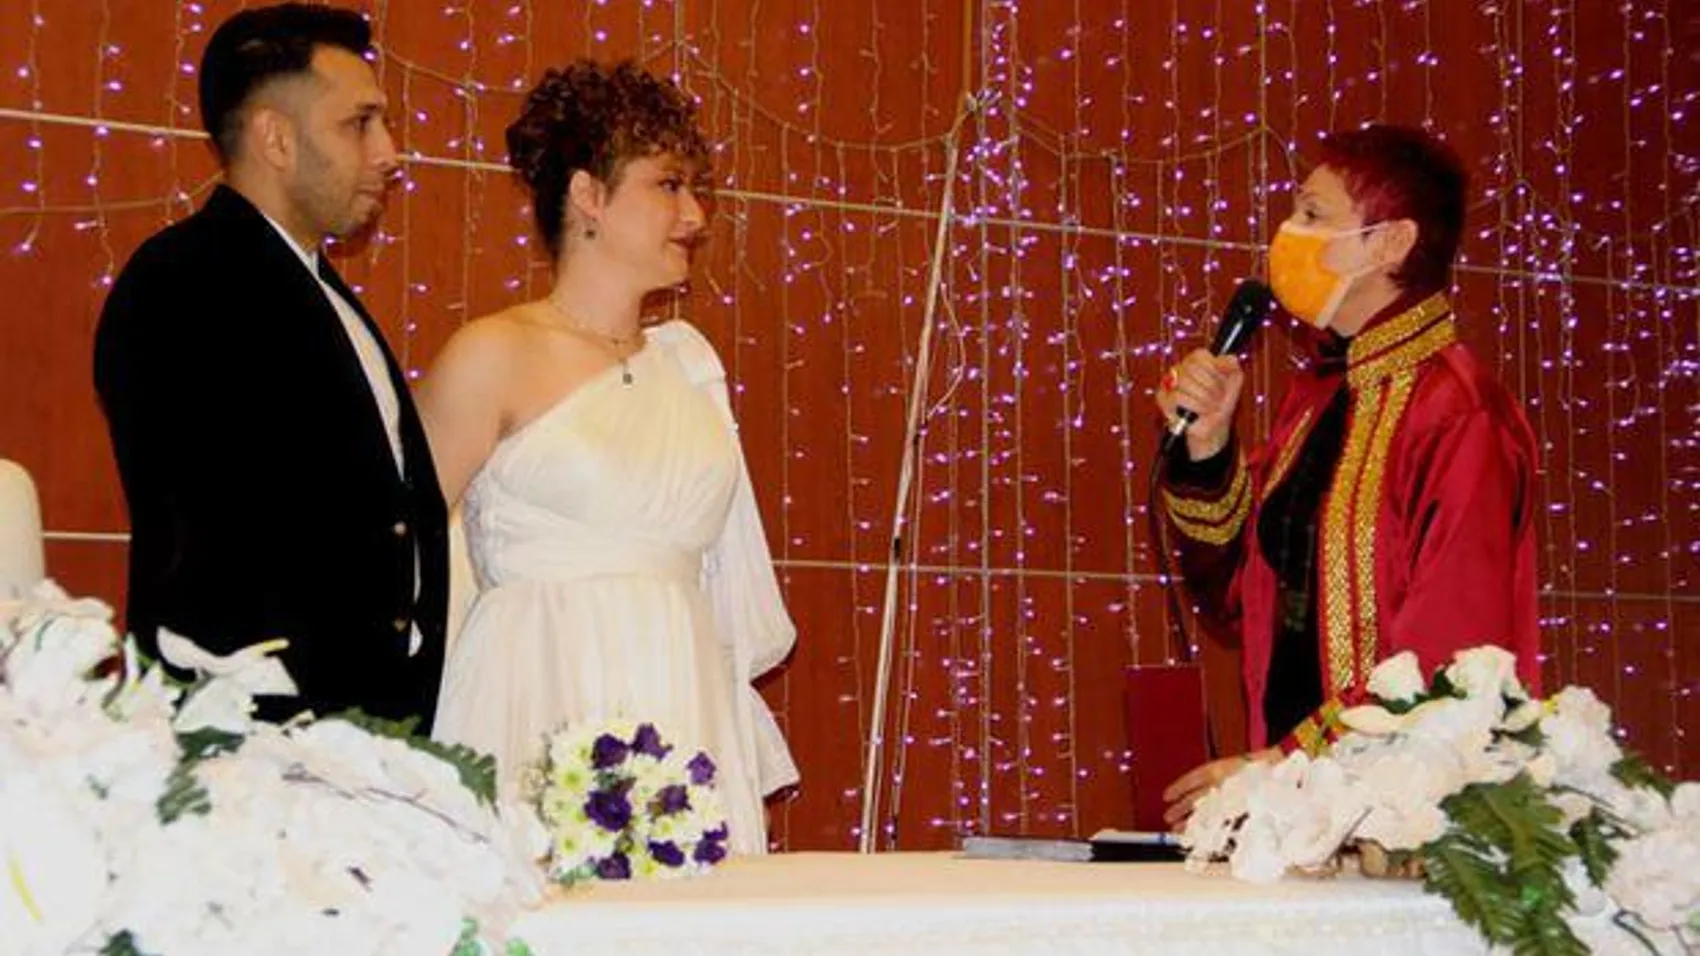 Nikah memuru fenomen oldu! Evlenen çiftlere tavsiyeleri 2 milyon kez izlendi